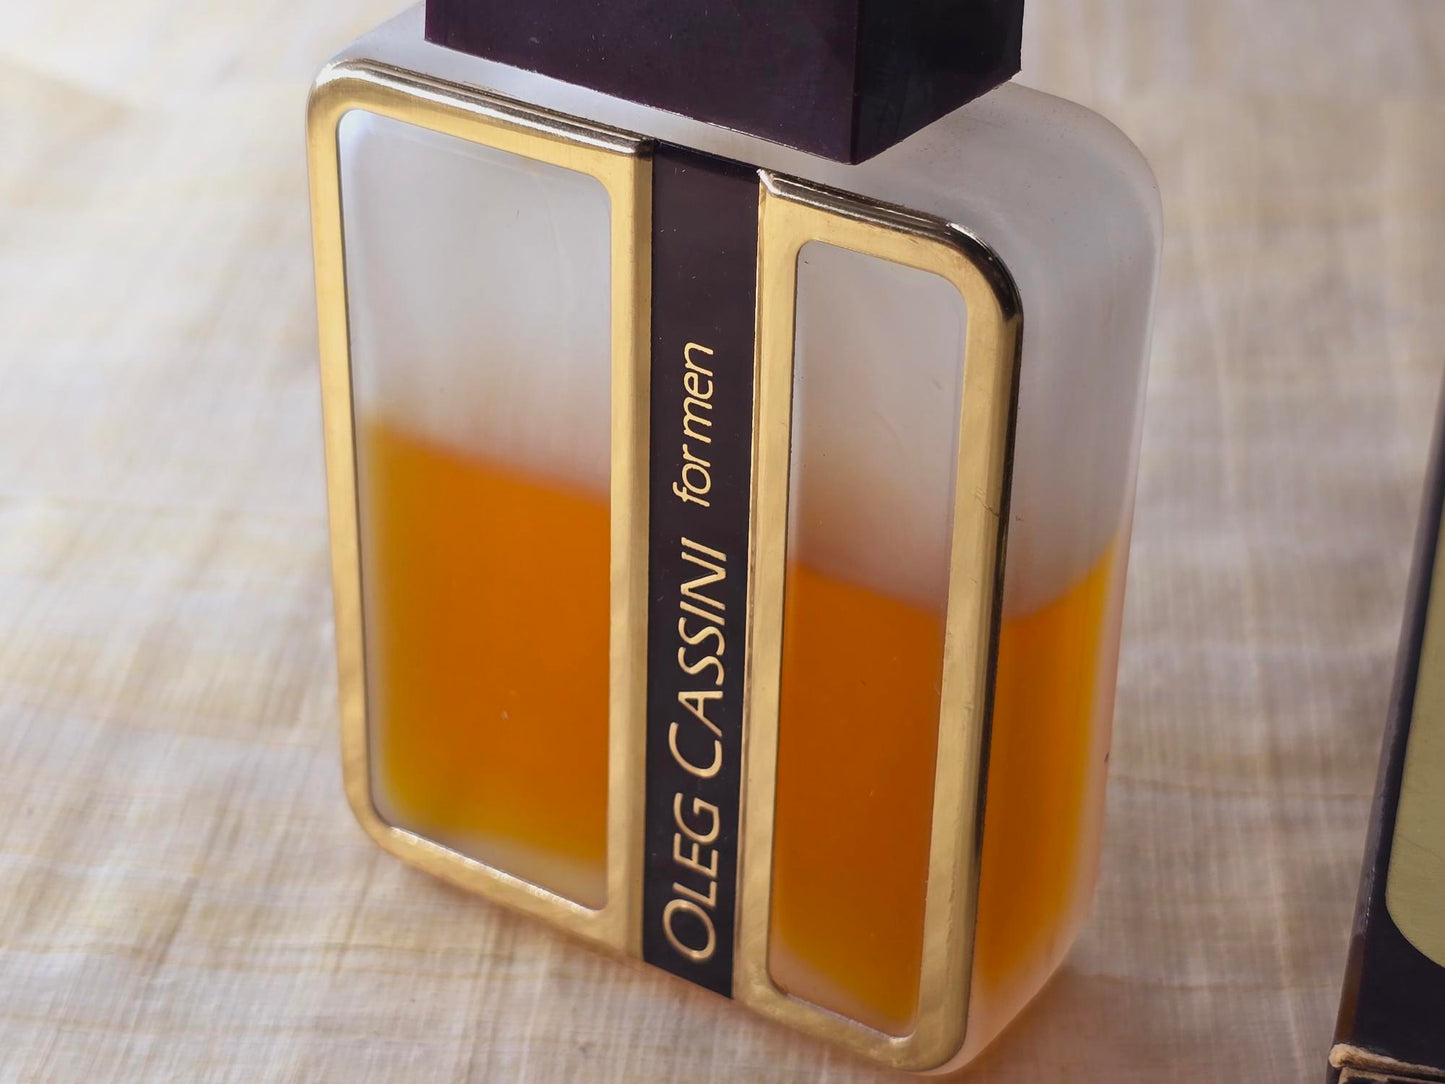 Oleg Cassini Jovan for men EDT Spray 60 ml 2  oz, Vintage, Rare, As Pics